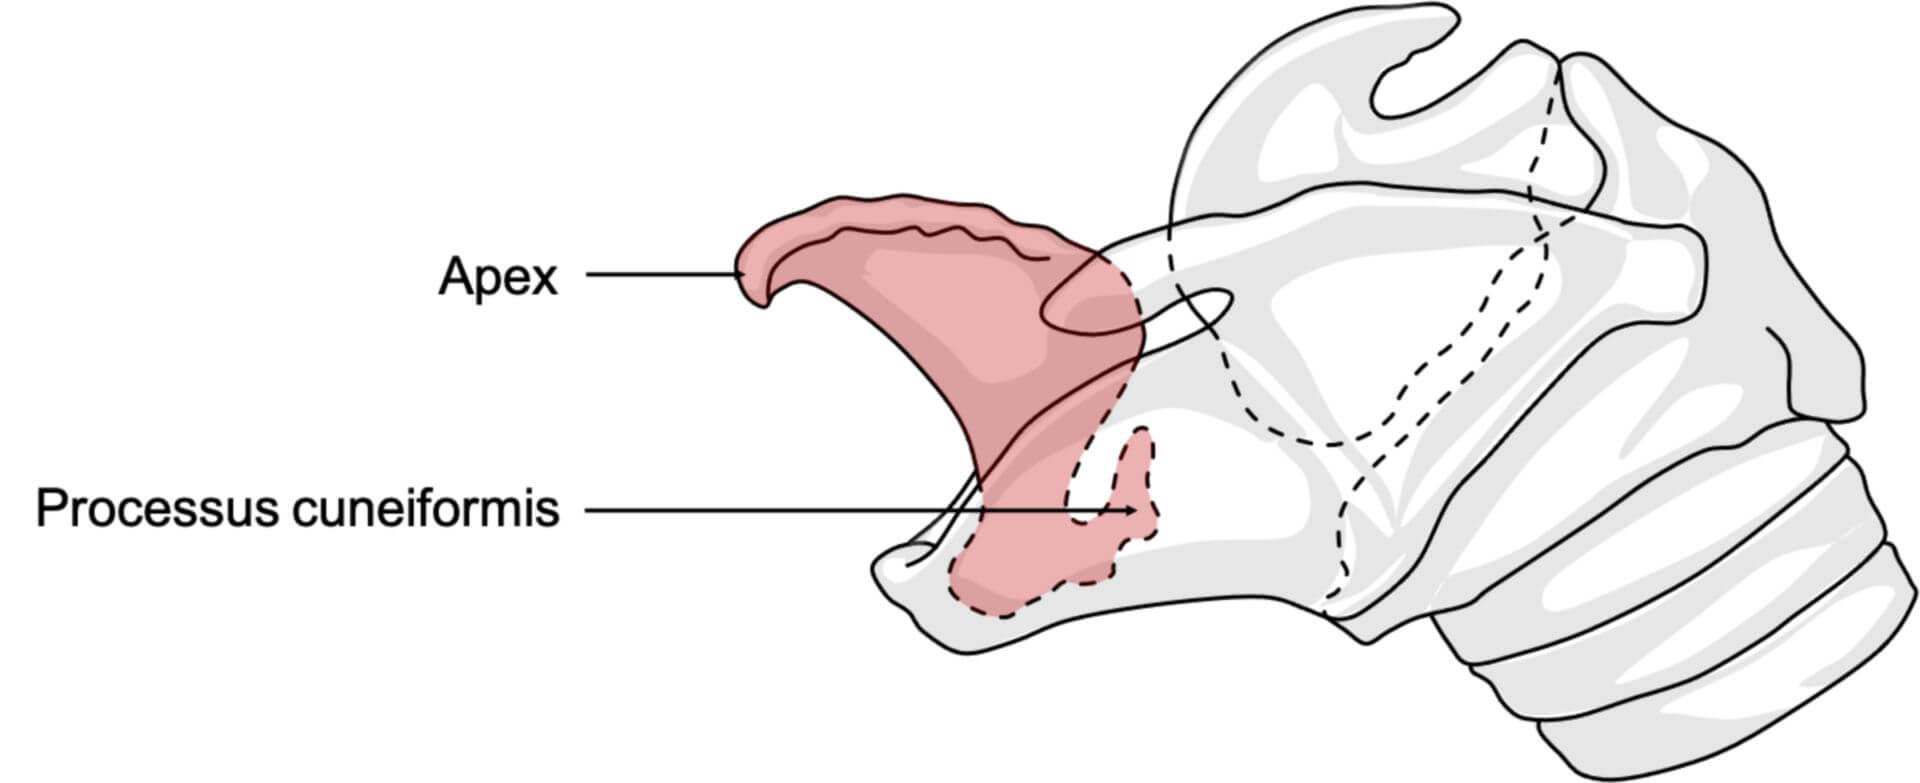 Cartilago epiglottica beim Pferd (© Patrick Messner)